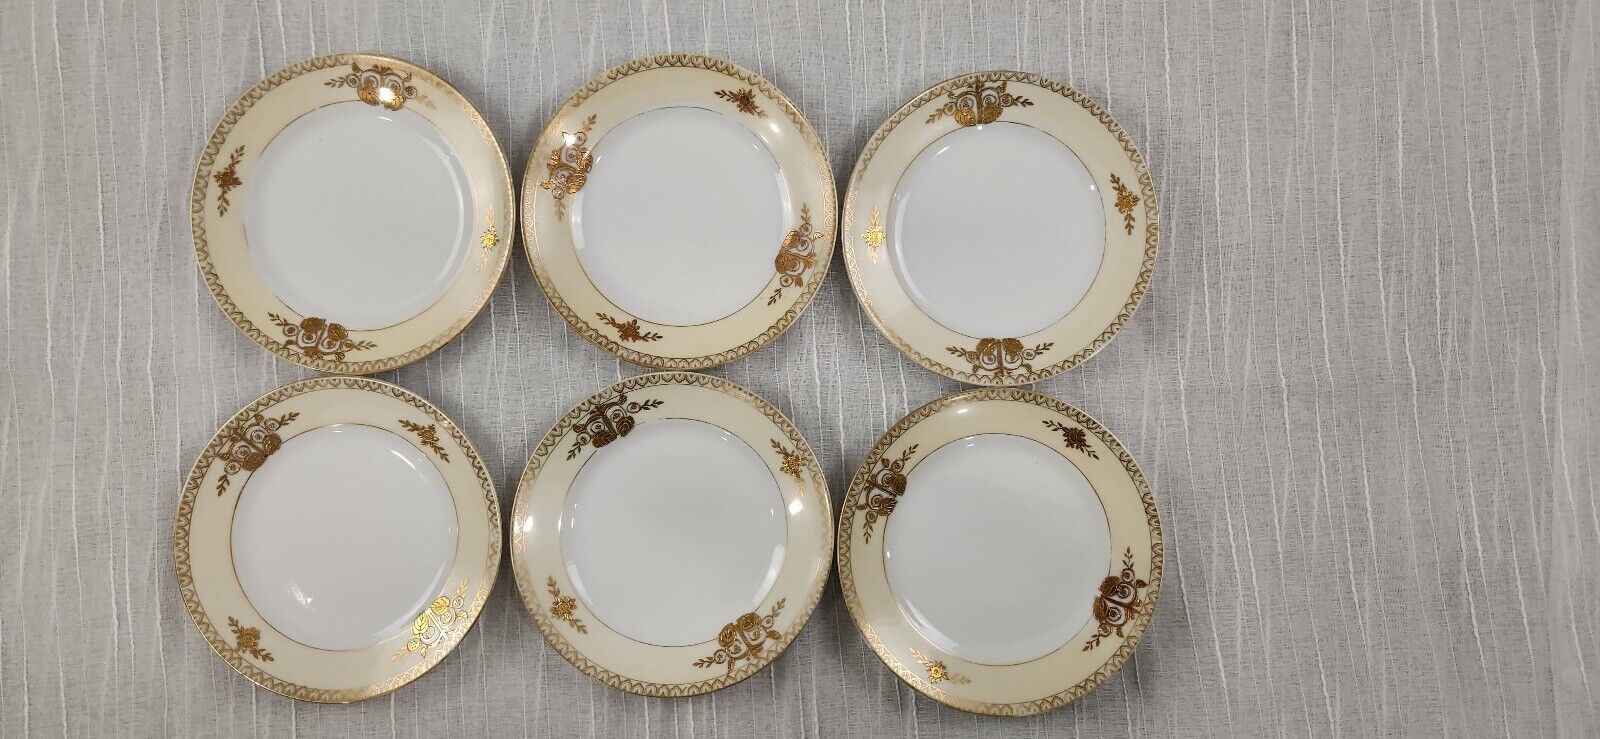 Noritake M Japan Plates Set of 6 Vintage Collector Plates Gold Gilded Plates